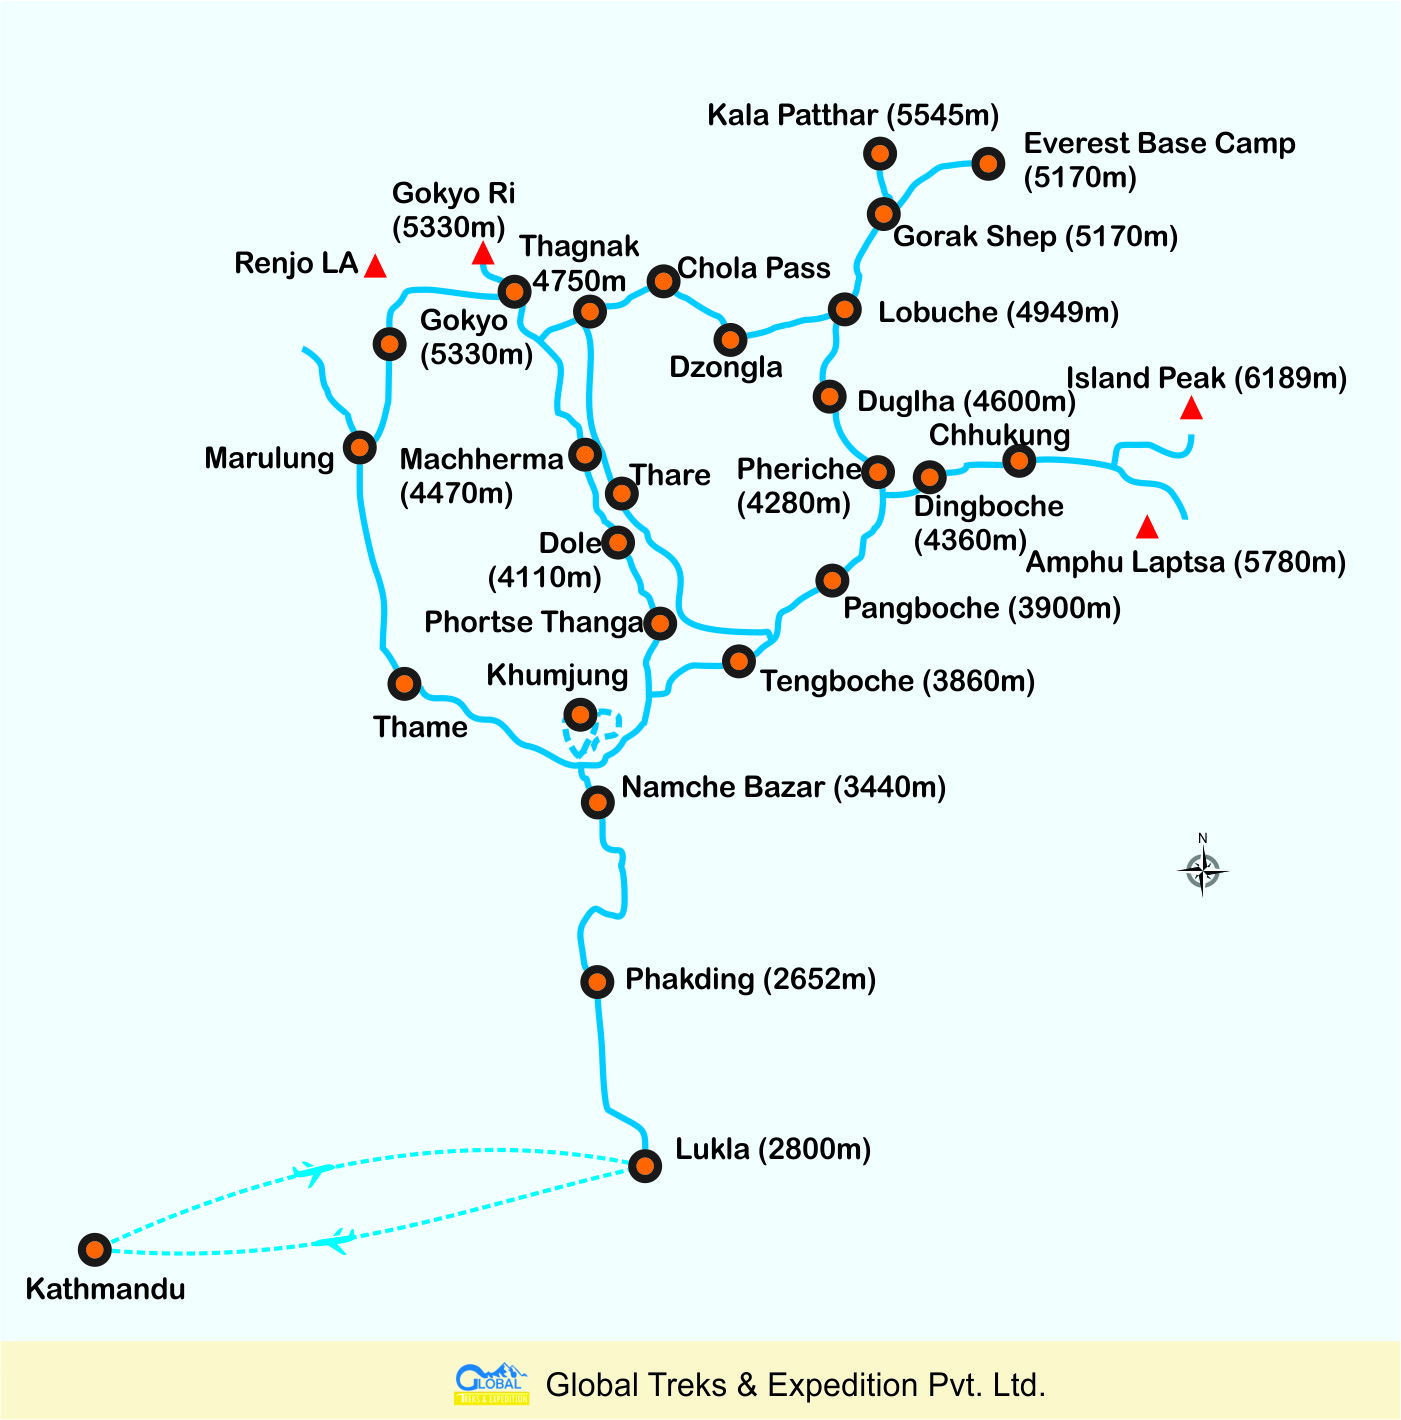 Map of Everest Base Camp Trek